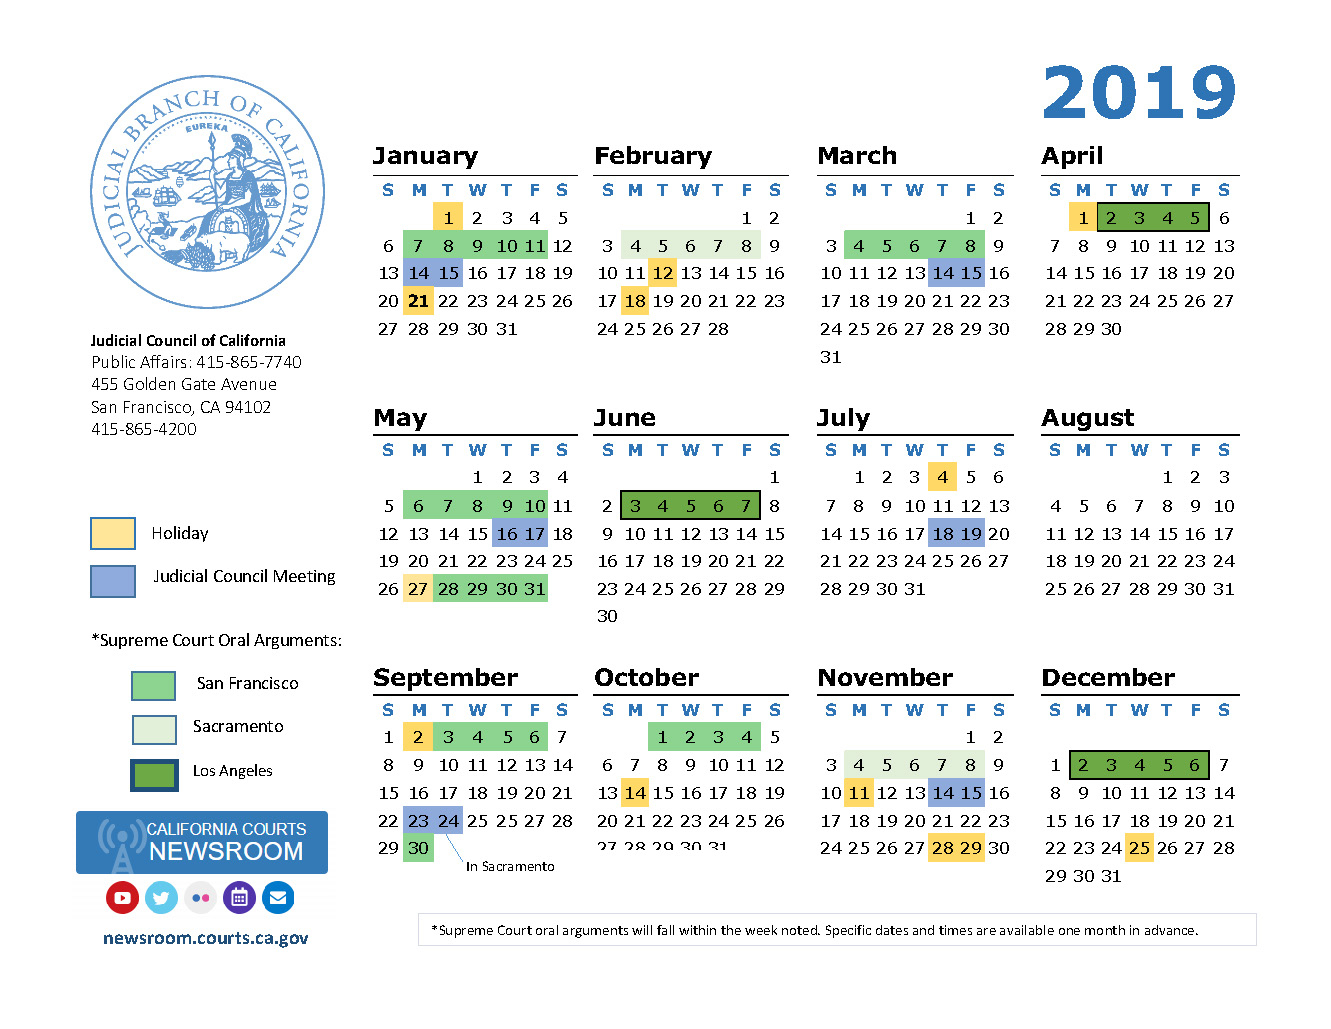 2019 California Courts Calendar | California Courts Newsroom